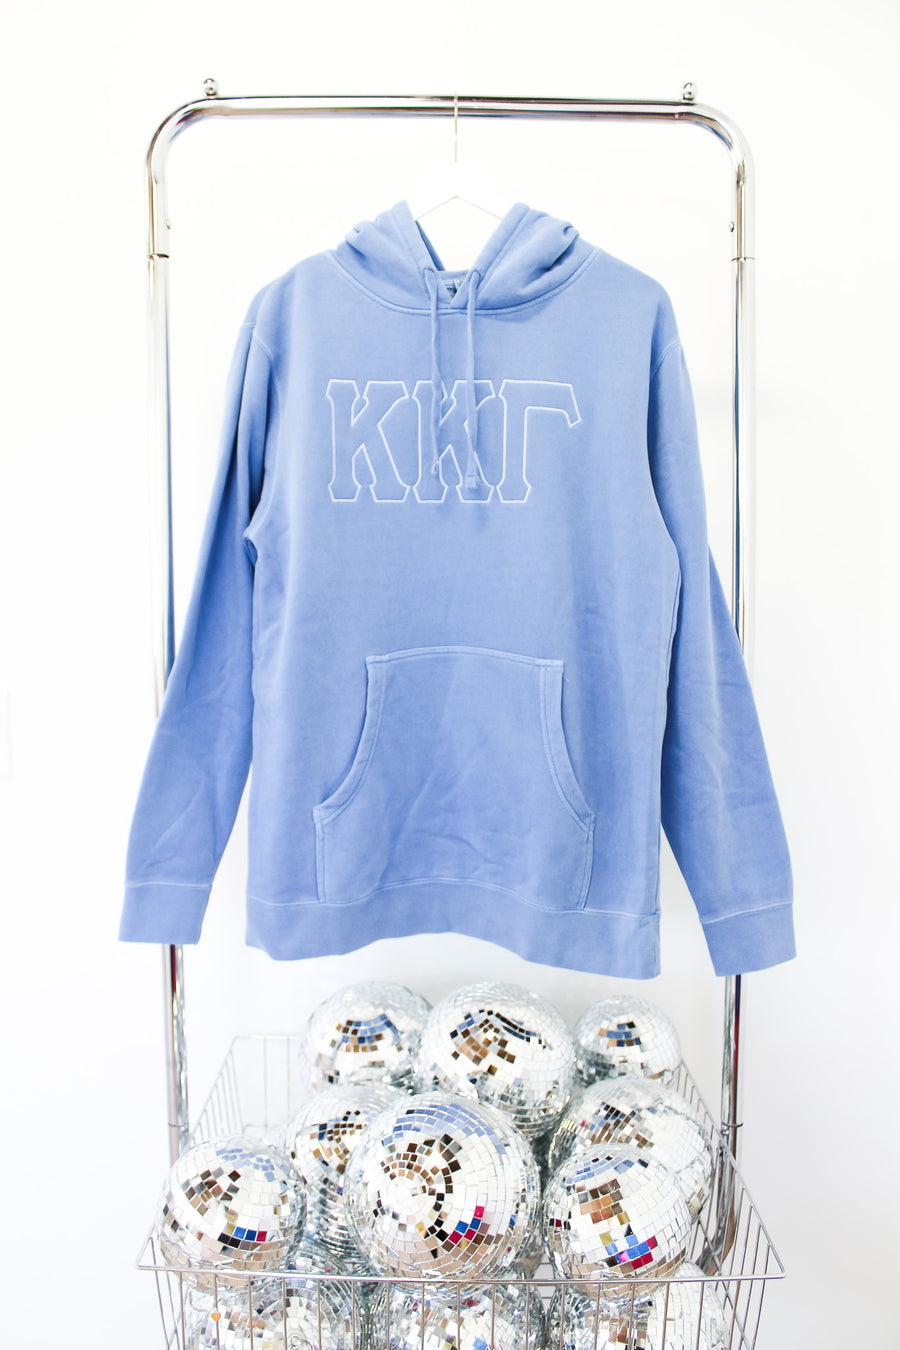 Kappa Kappa Gamma Suzette Embroidered Sweatshirt - MD LT BLUE